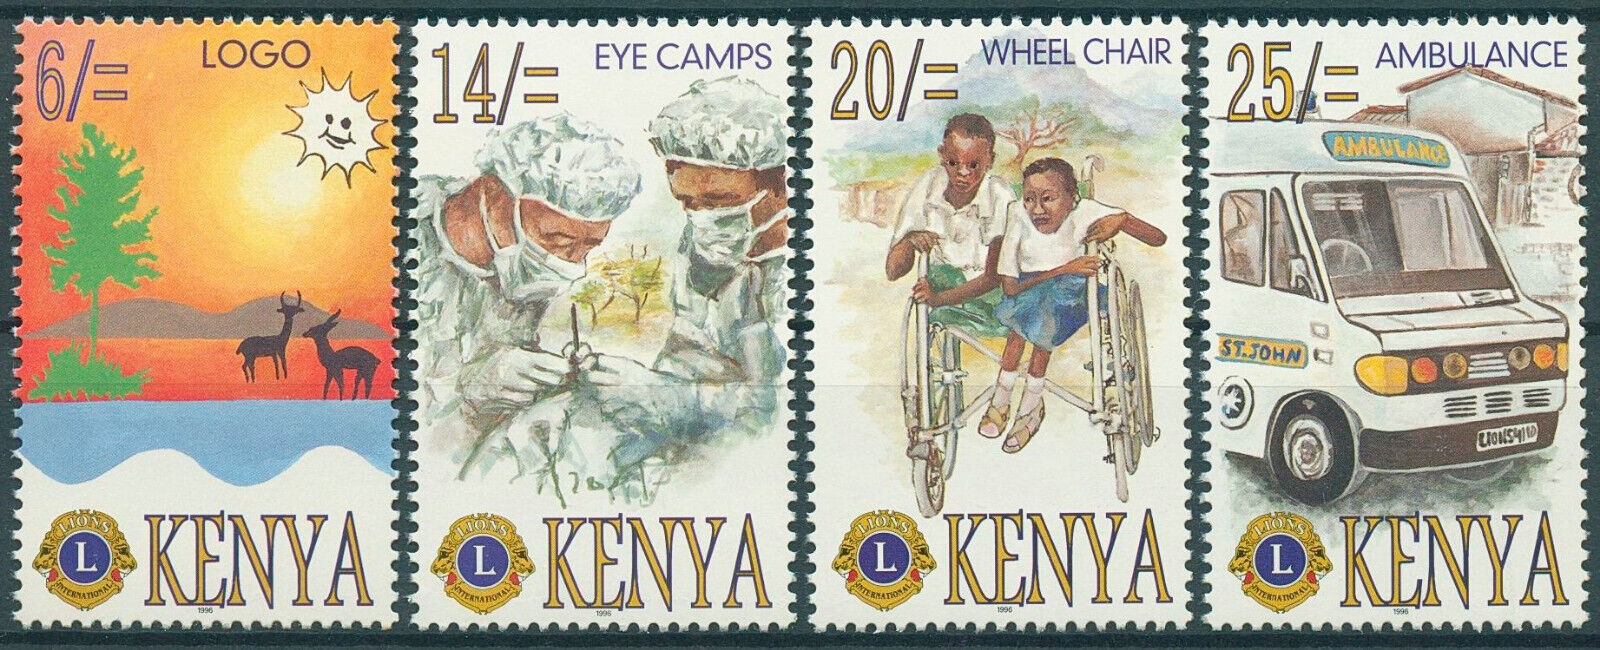 Kenya 1996 MNH Lions Club International Stamps Ambulance Organizations 4v Set